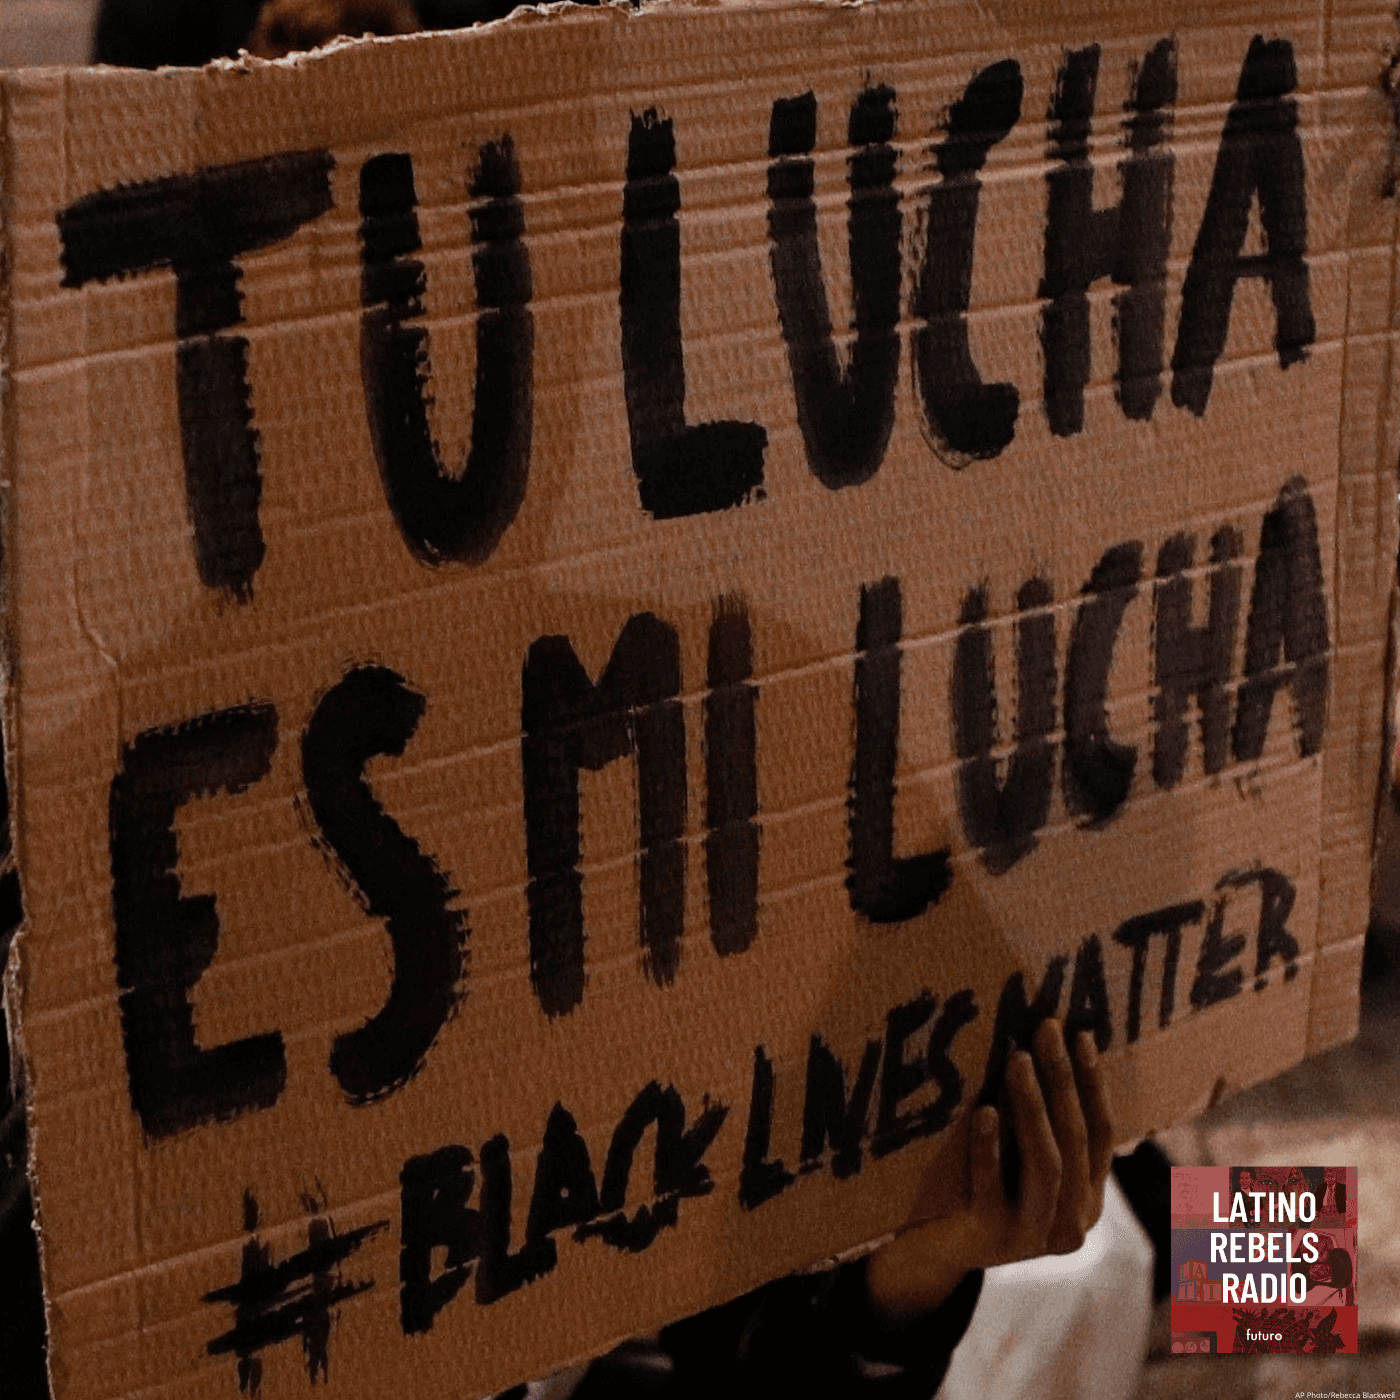 Thumbnail for "Black Lives Matter in Paraguay".